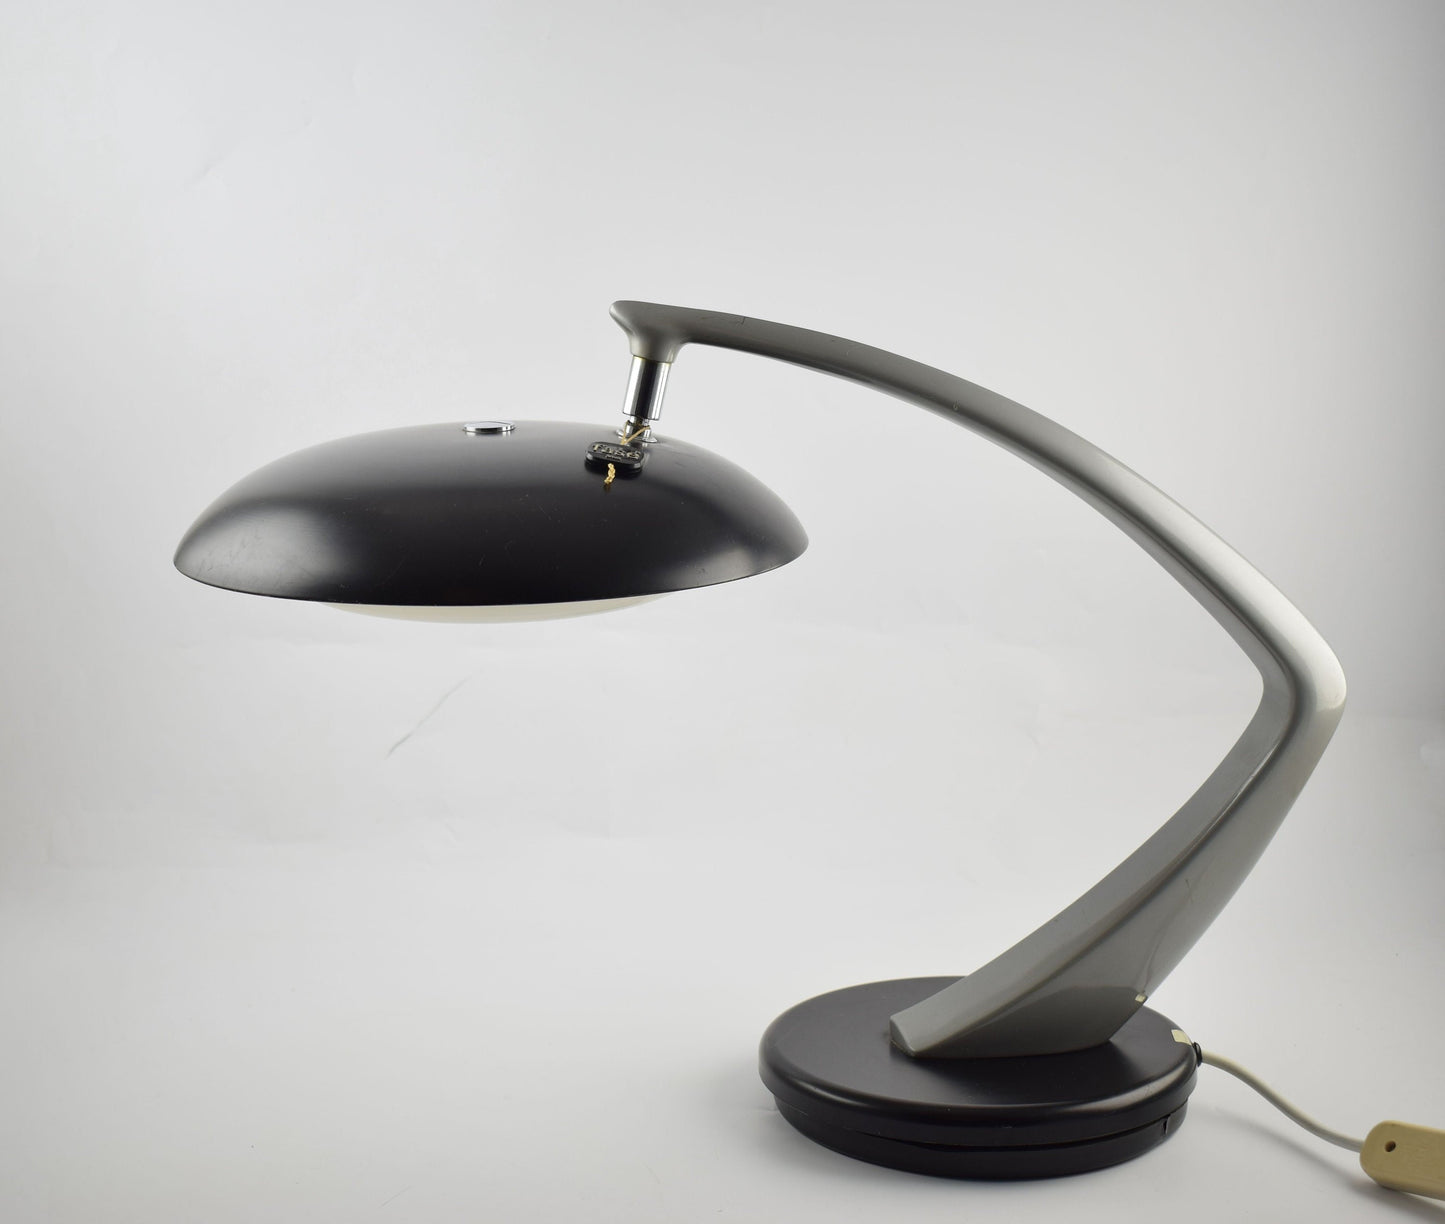 Fase Boomerang bureau tafellamp Madrid Spanje. Prachtige lamp uit de jaren 60 en begin jaren 70